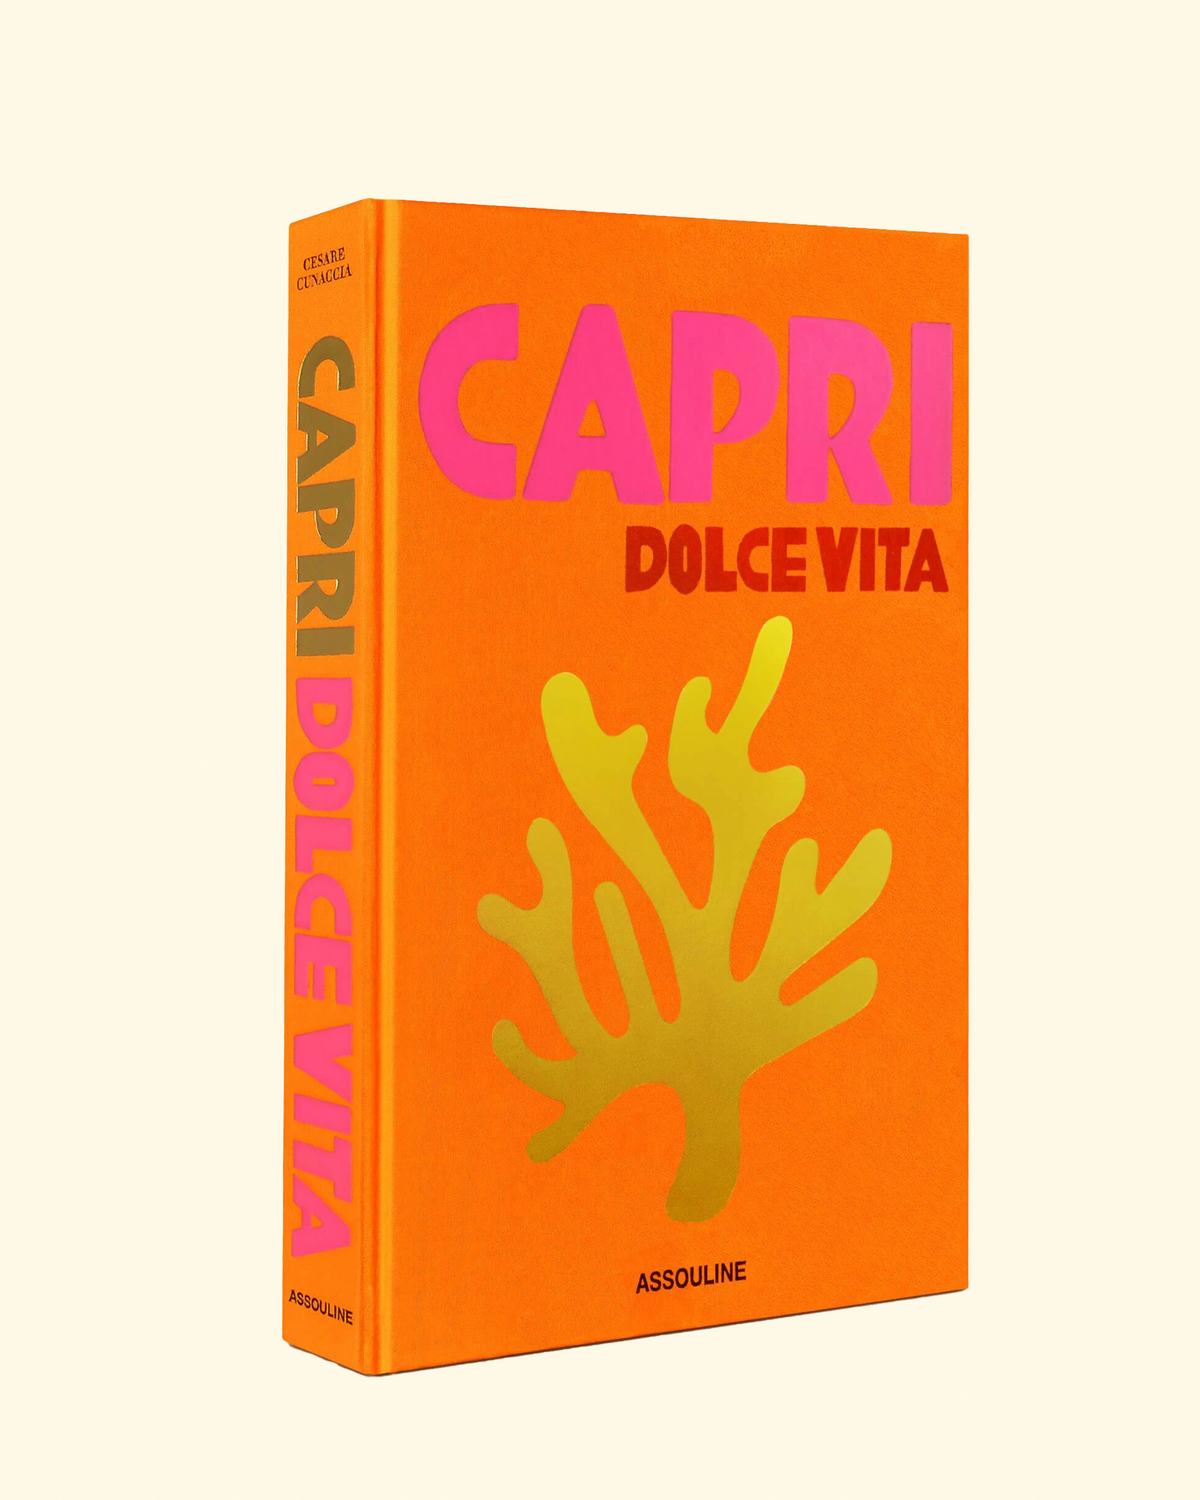 Capri Doice Vita